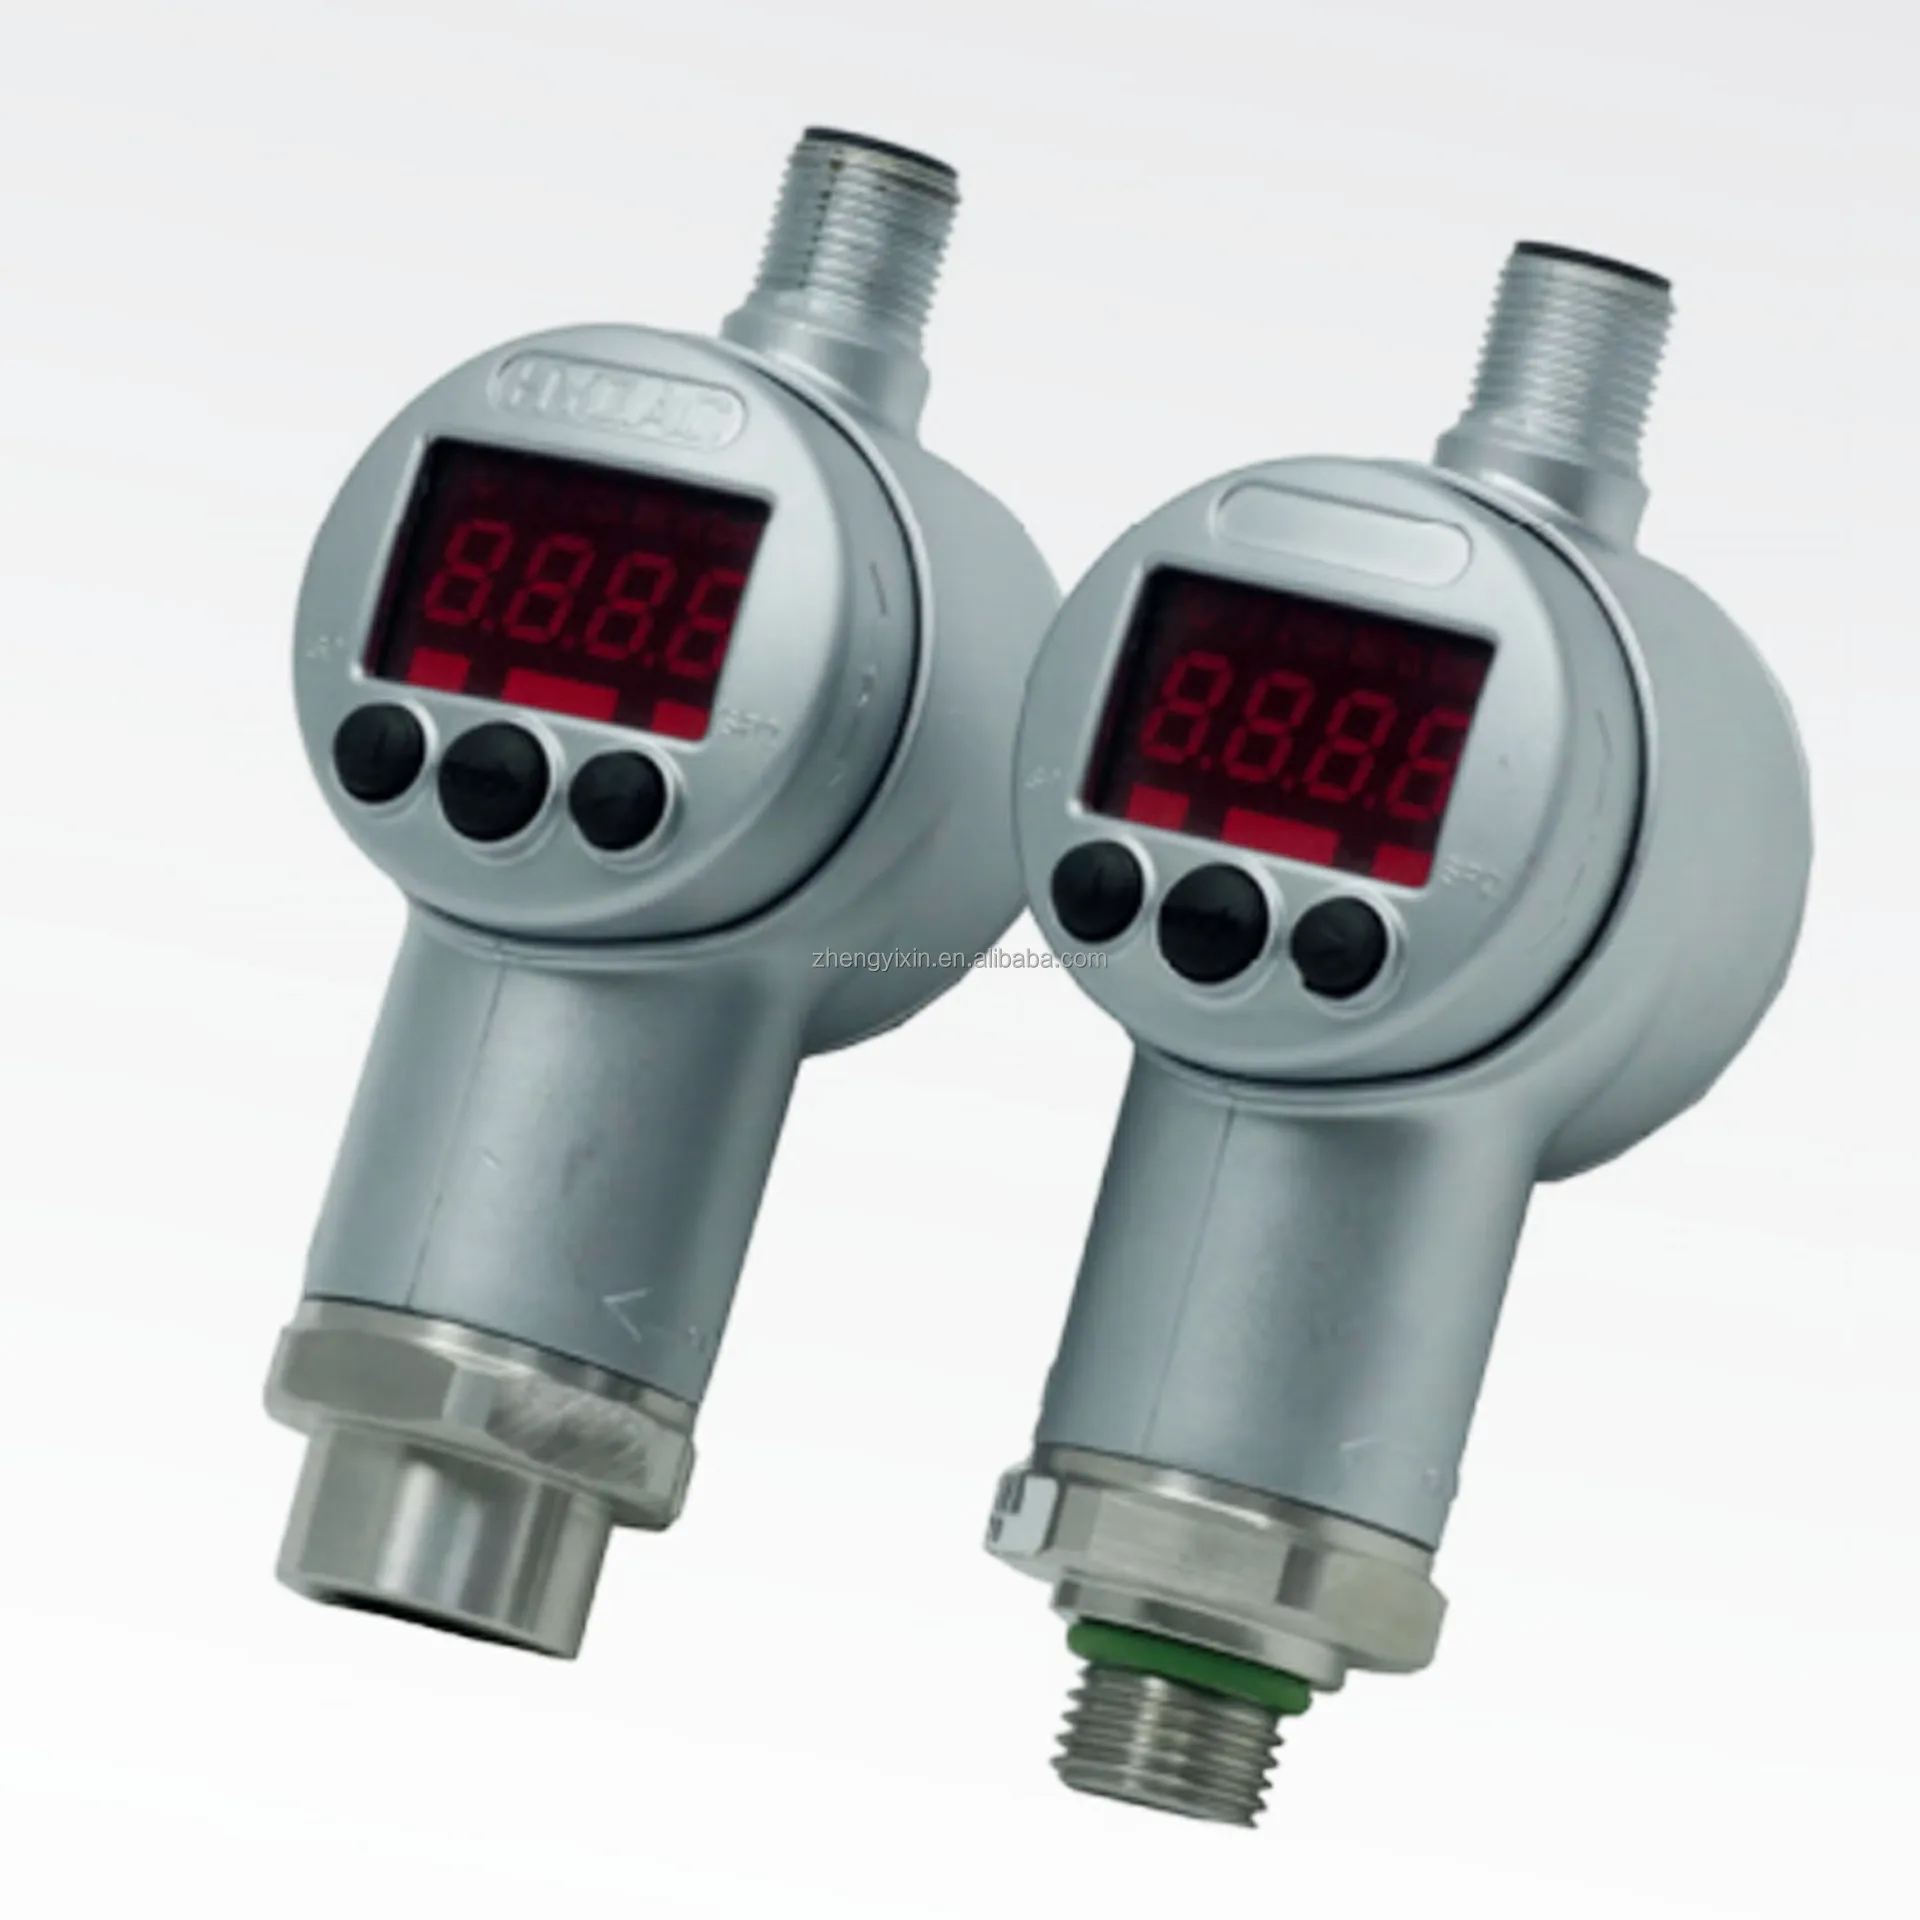 

EDS 8446-2-0250-N00 Sensors for measuring pressure, temperature, linear position, position, liquid level, flow